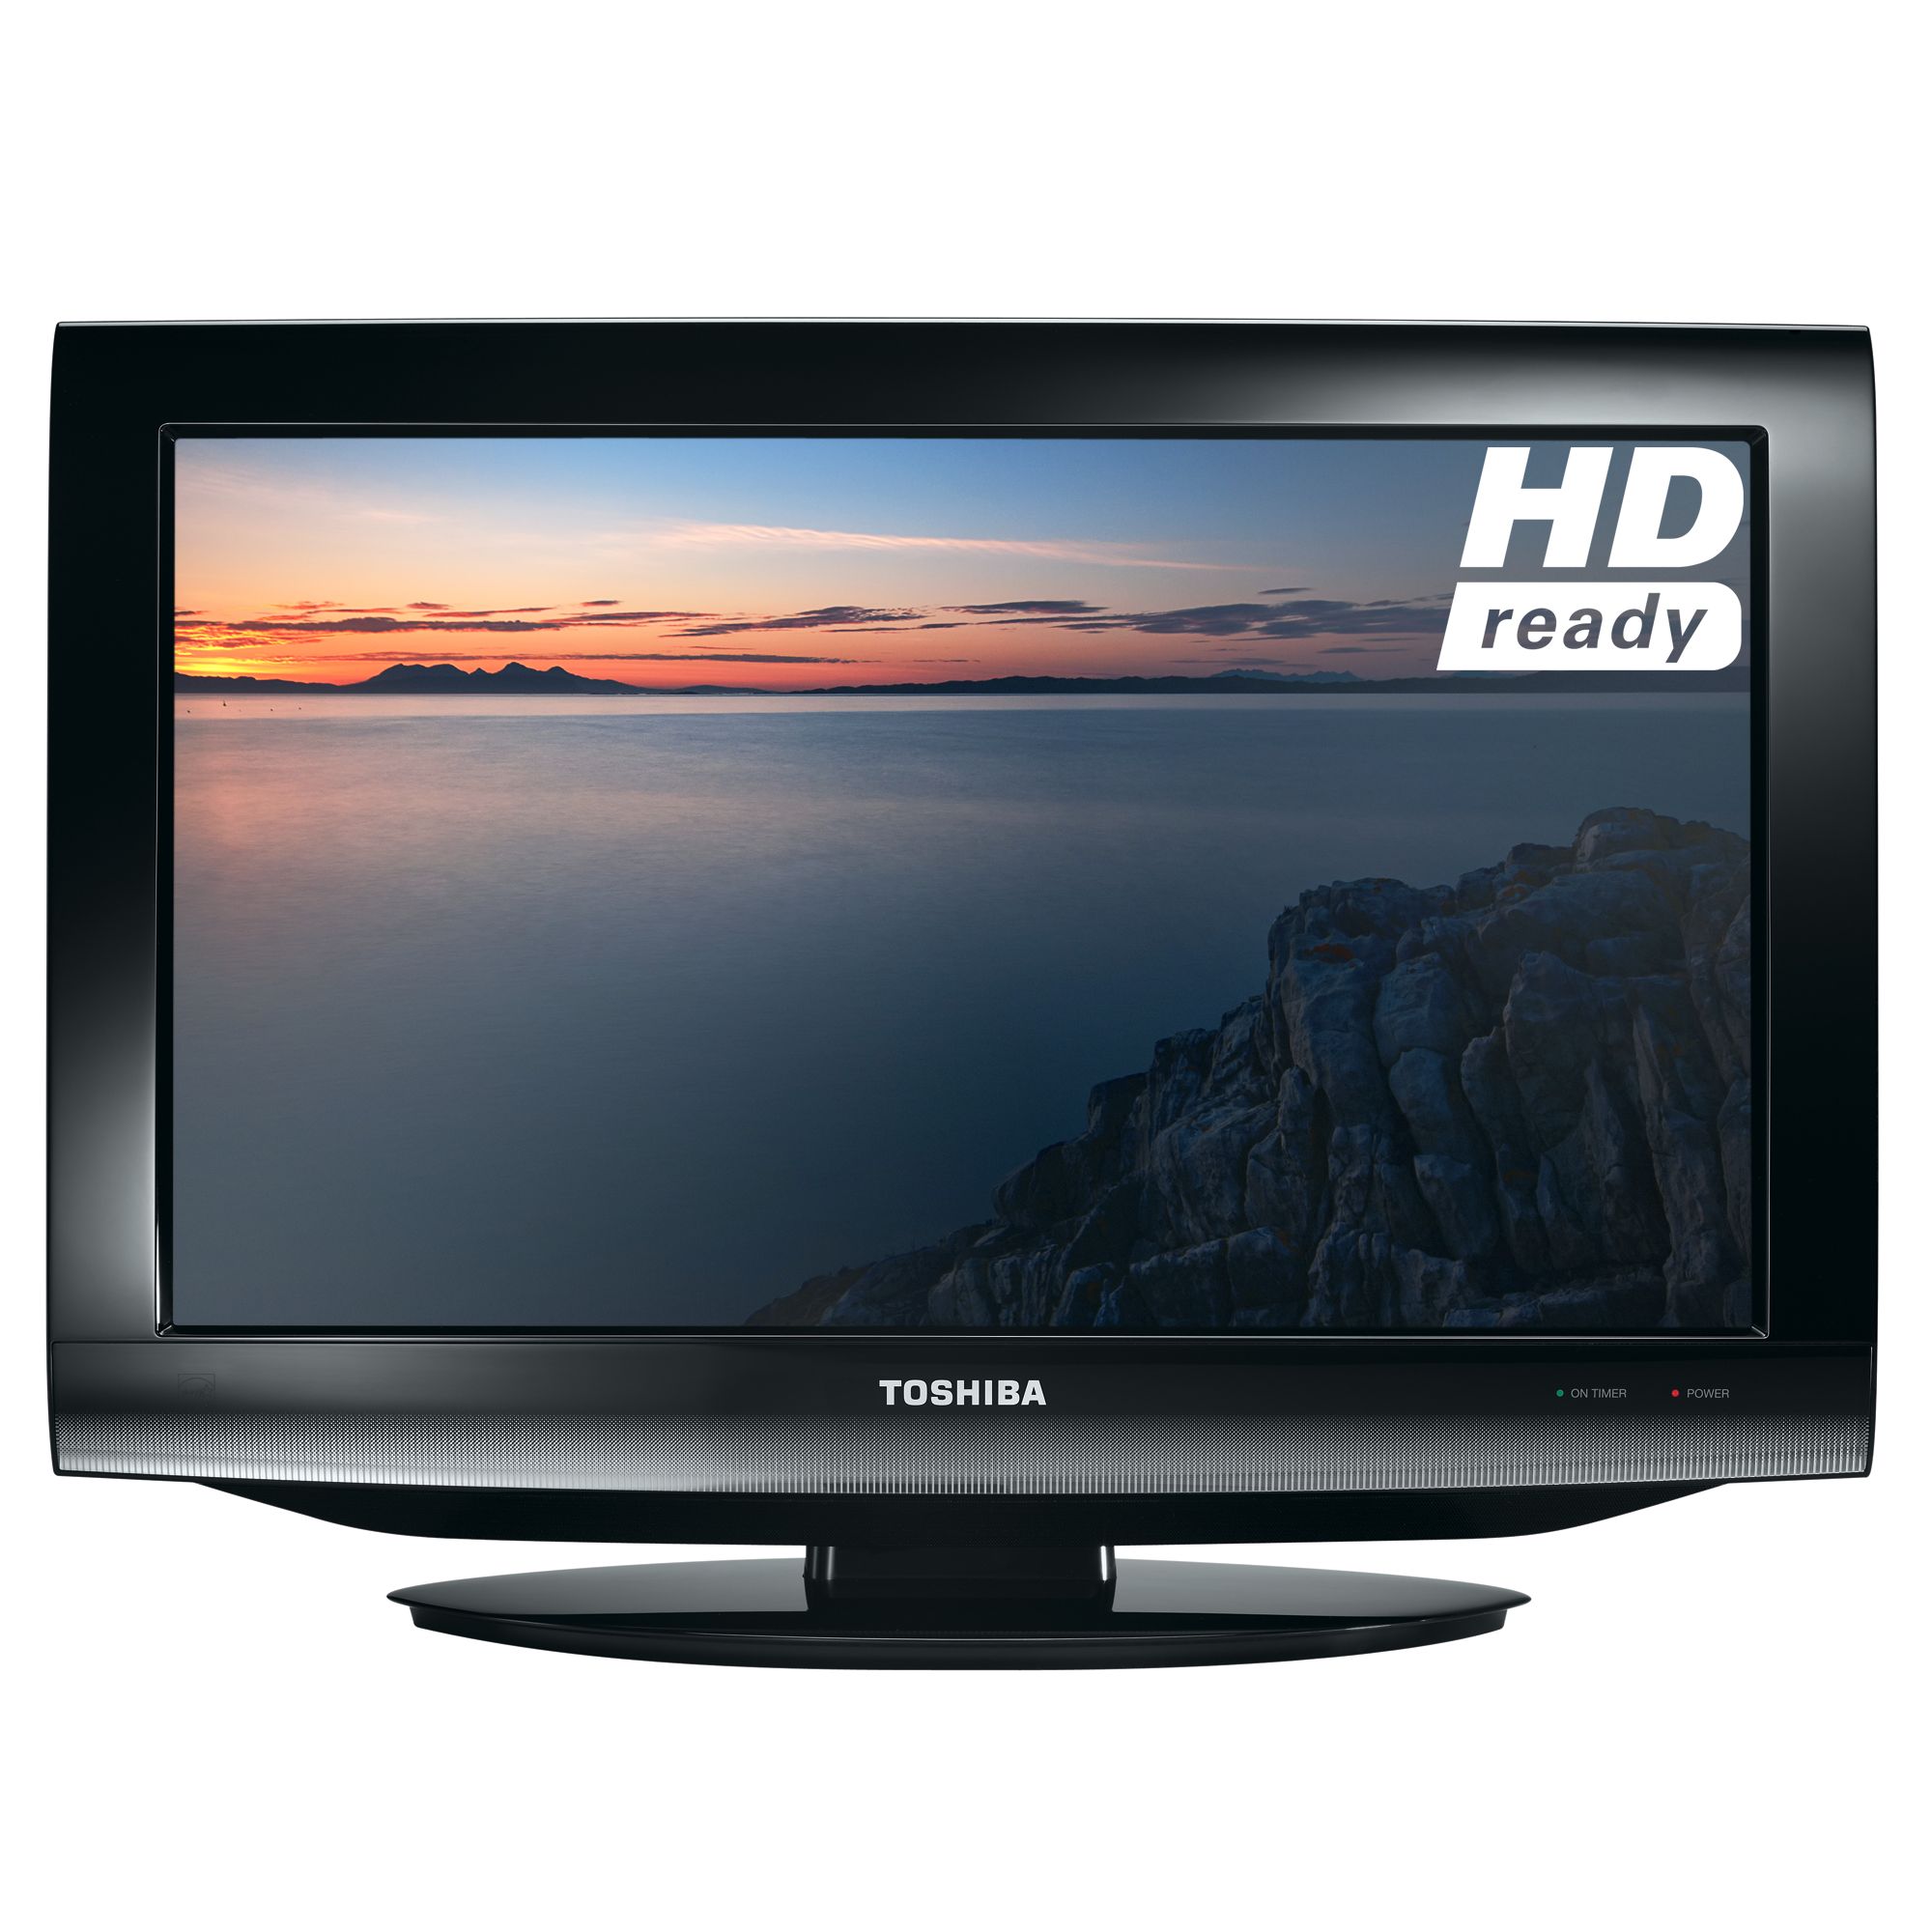 Toshiba 19DV713B LCD HD Ready Digital Television/DVD Combi, 19 Inch, Black at John Lewis